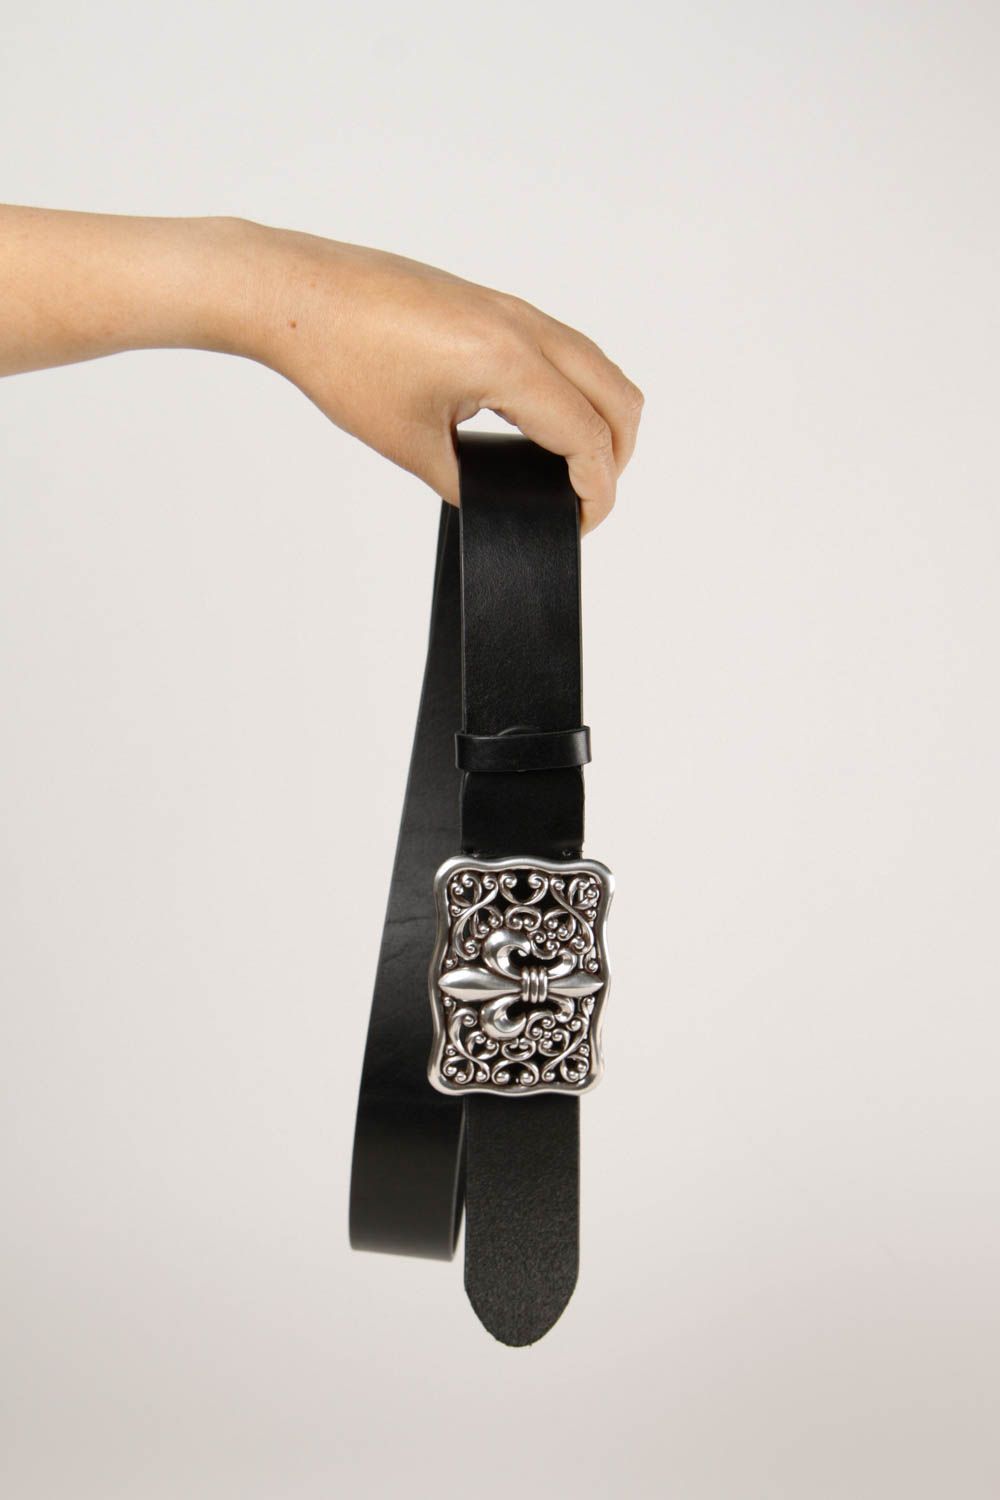 Handmade belt leather belt for men leather accessory gift ideas black belt photo 2